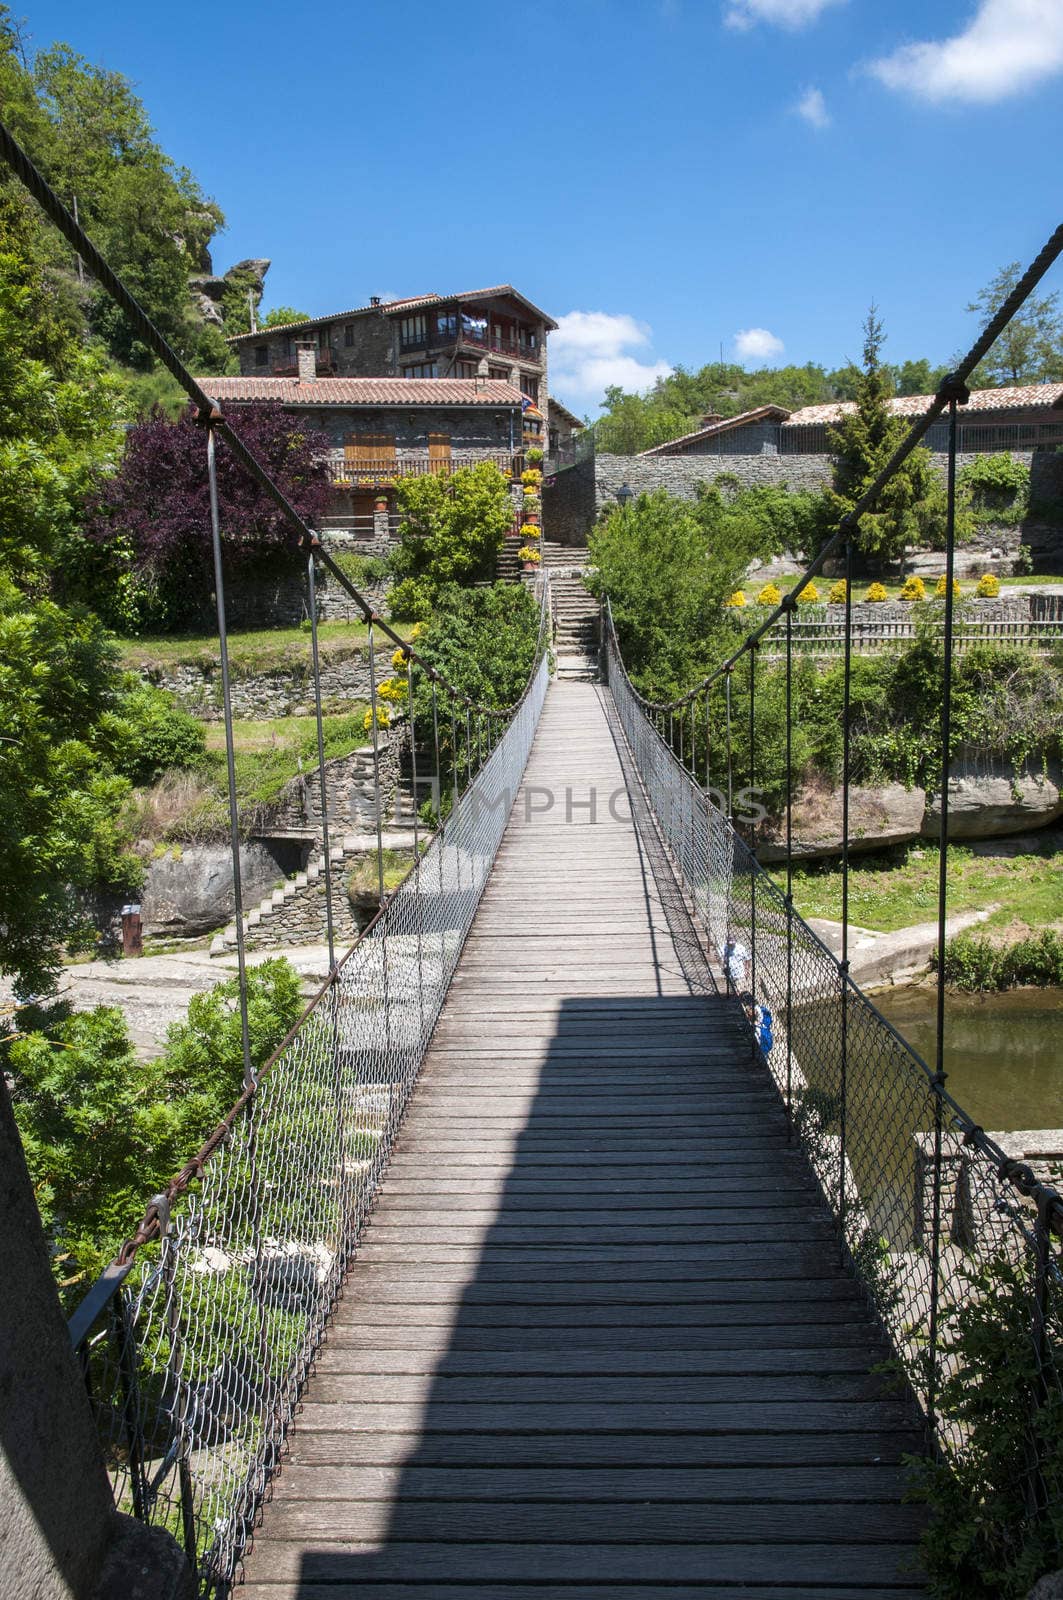 Rupit suspension bridge through which the river